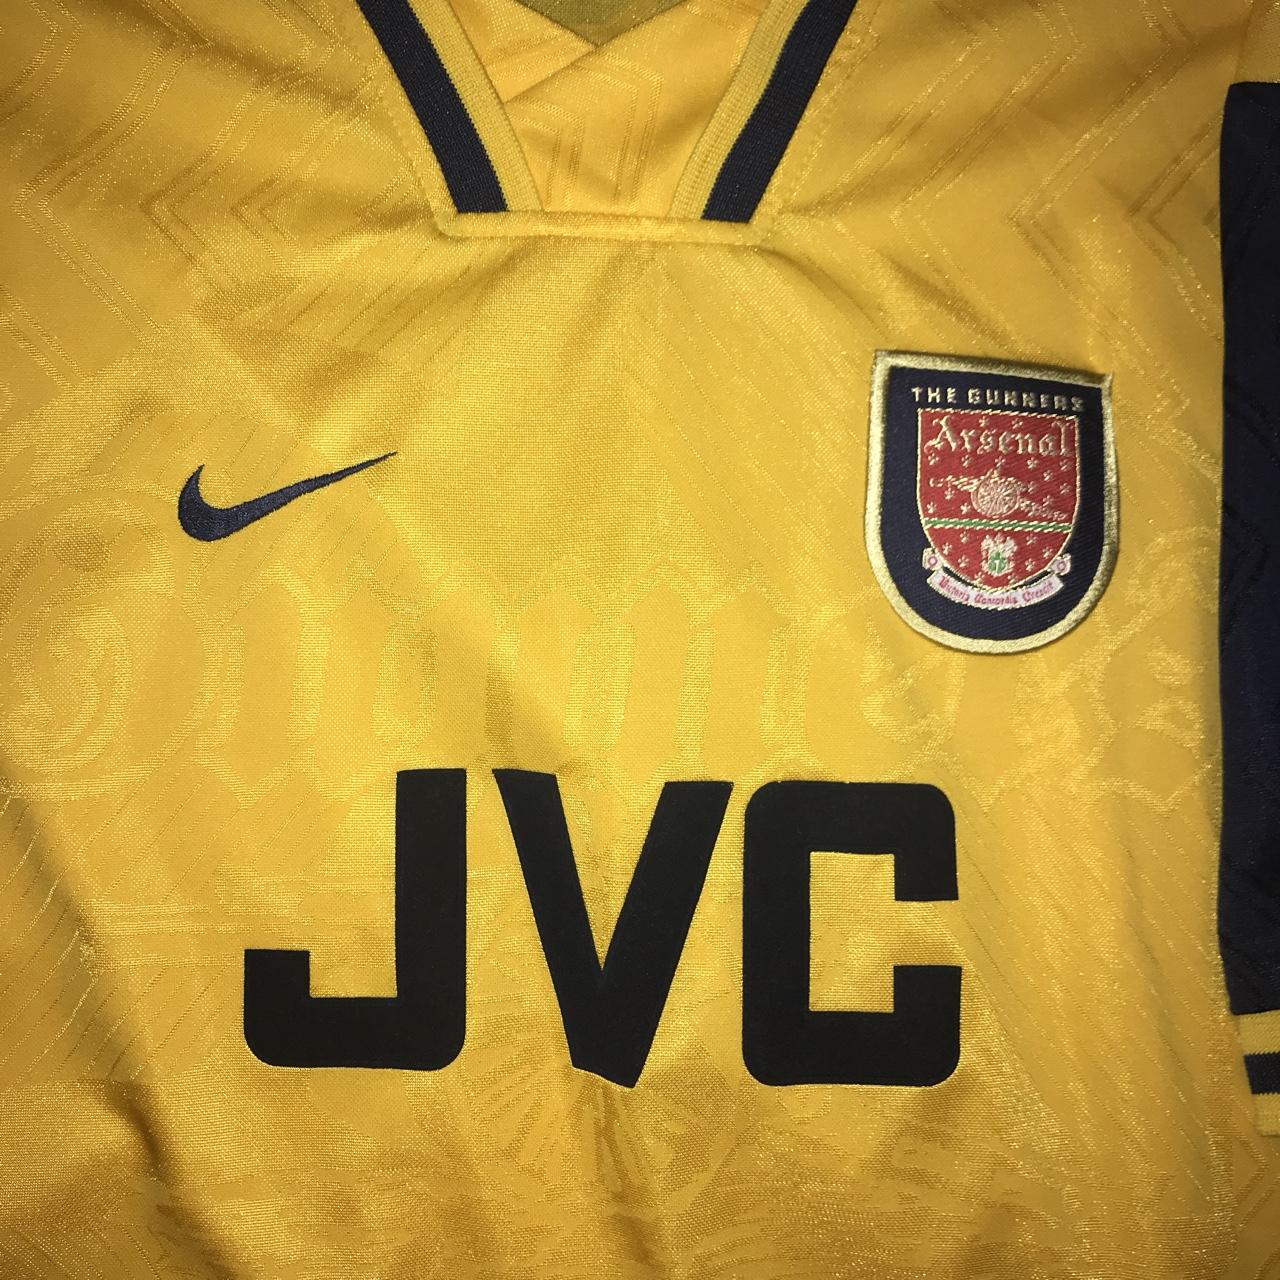 1997 arsenal shirt